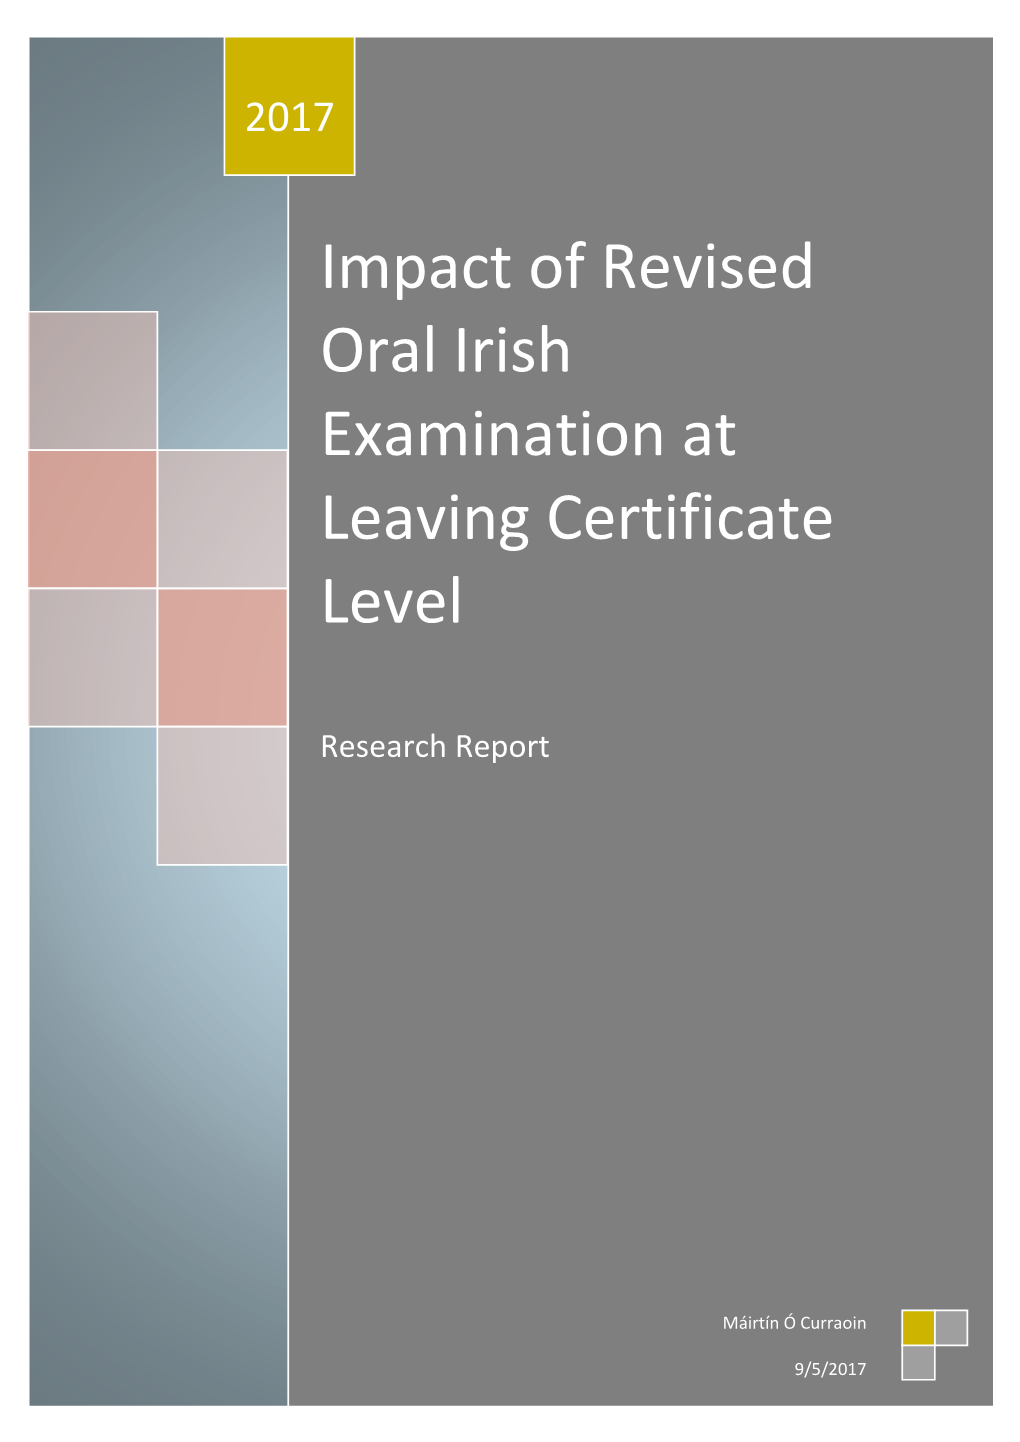 Impact of Revised Oral Irish Examination at Leaving Certificate Level